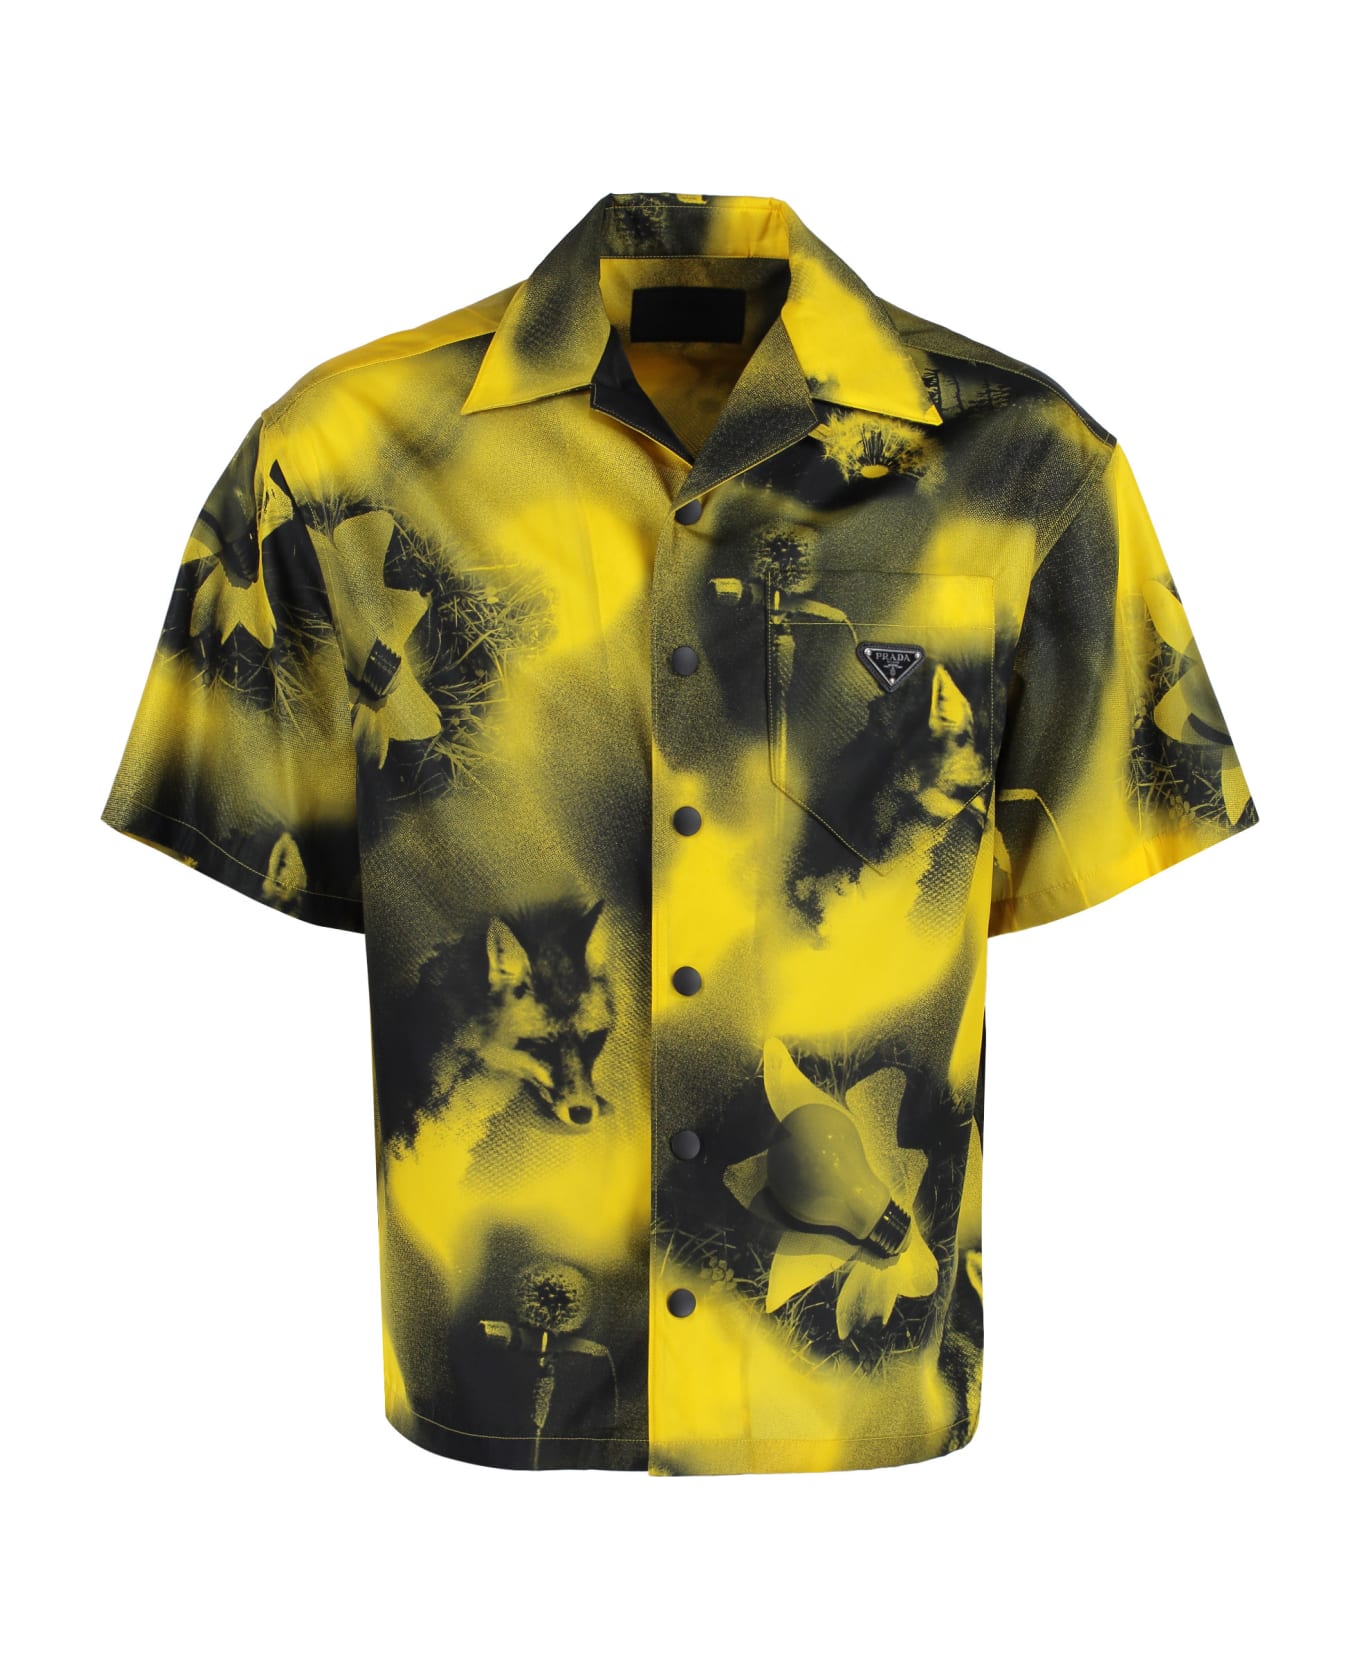 Prada Printed Short Sleeved Shirt - Multicolor